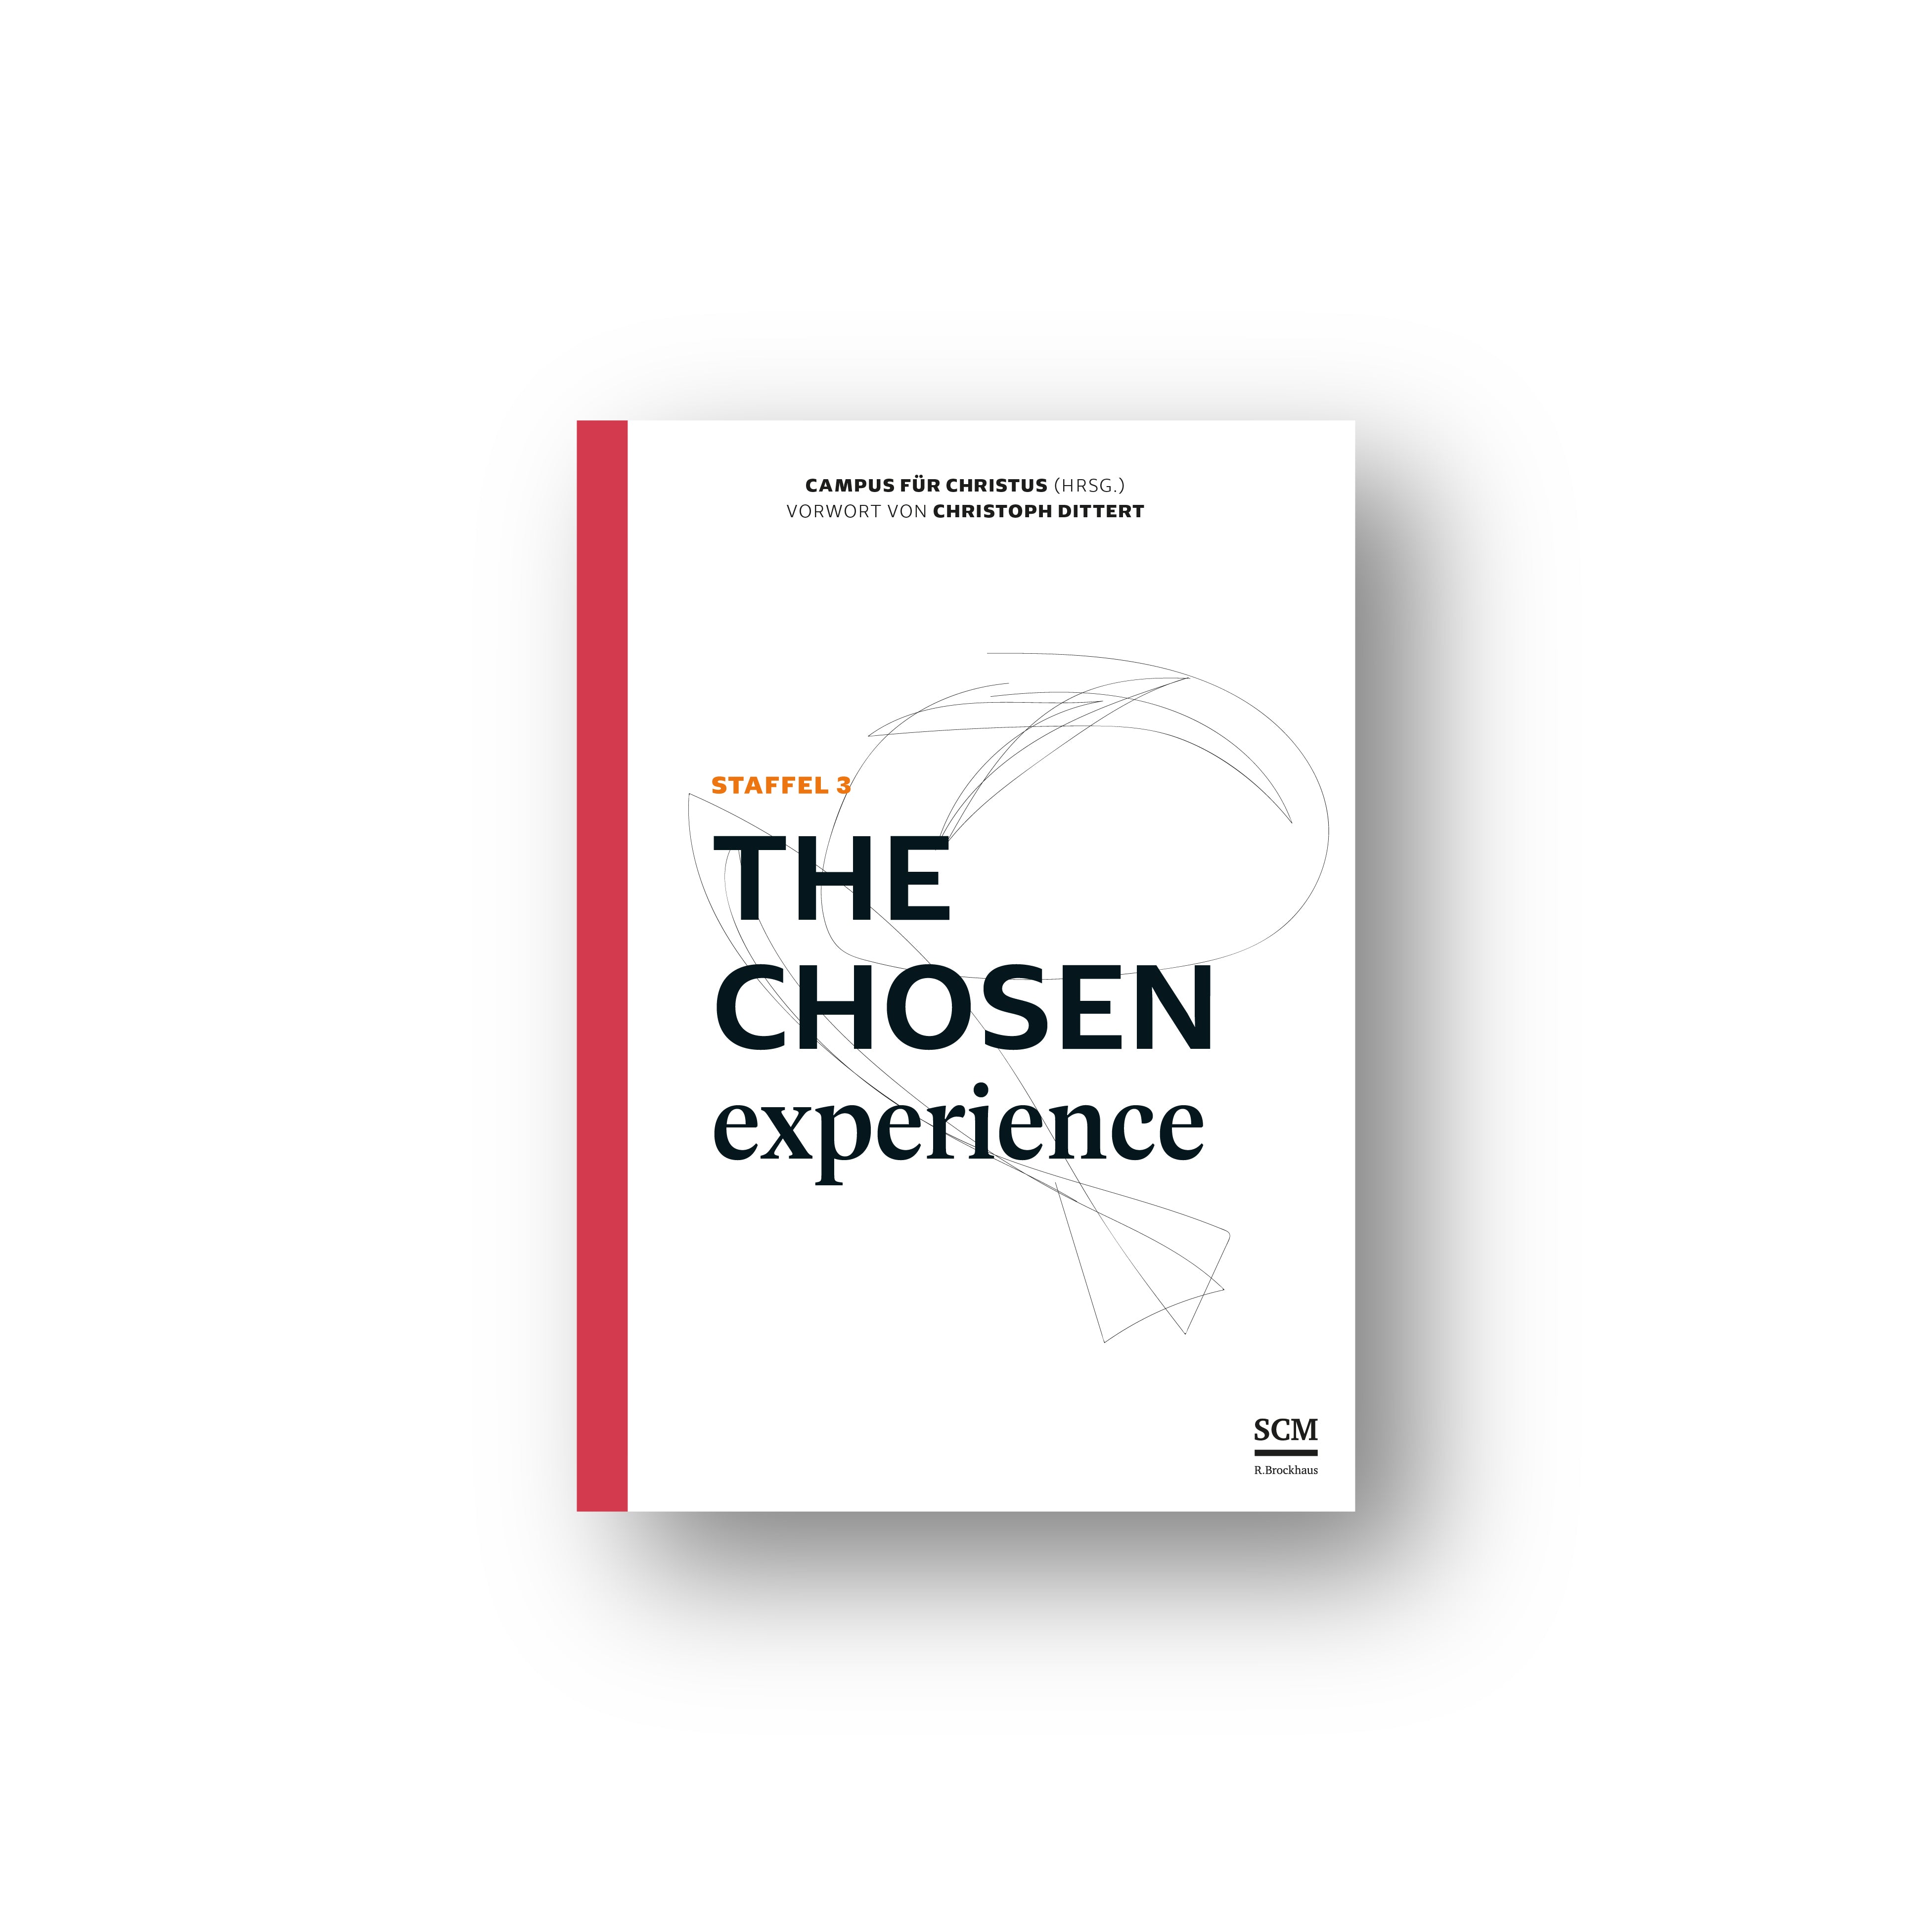 The Chosen experience - Staffel 3